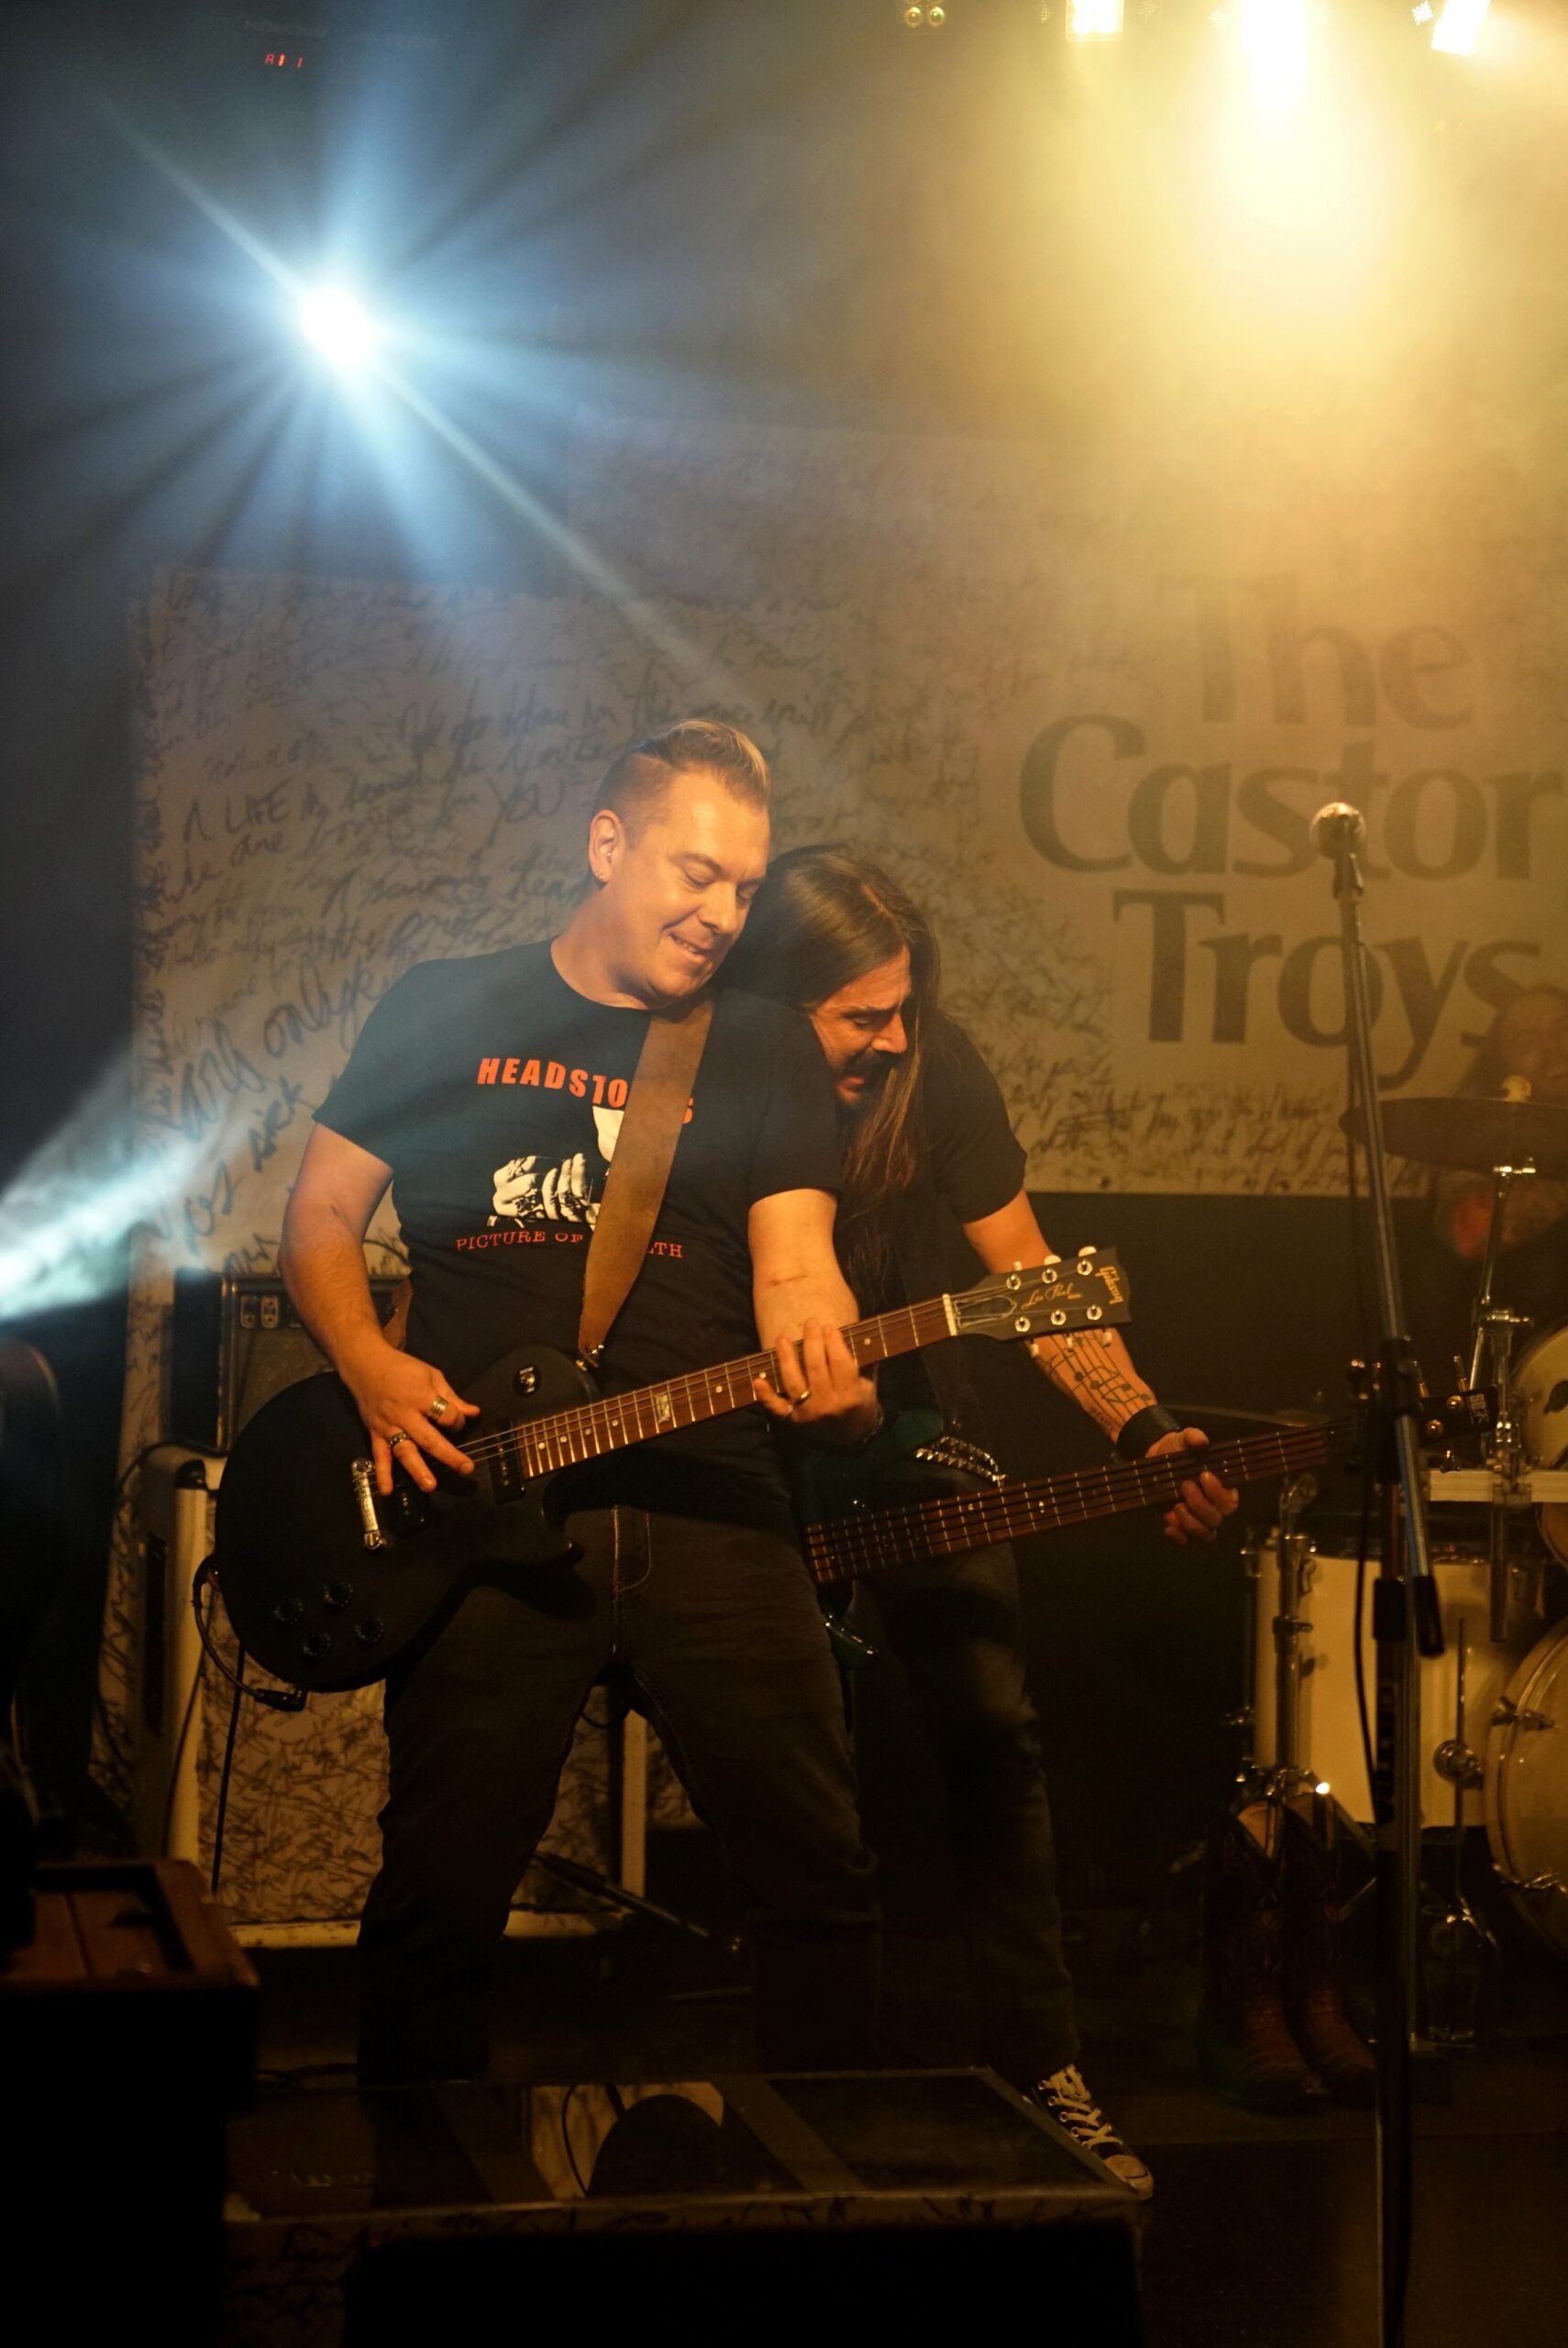 Castor Troys at Corktown